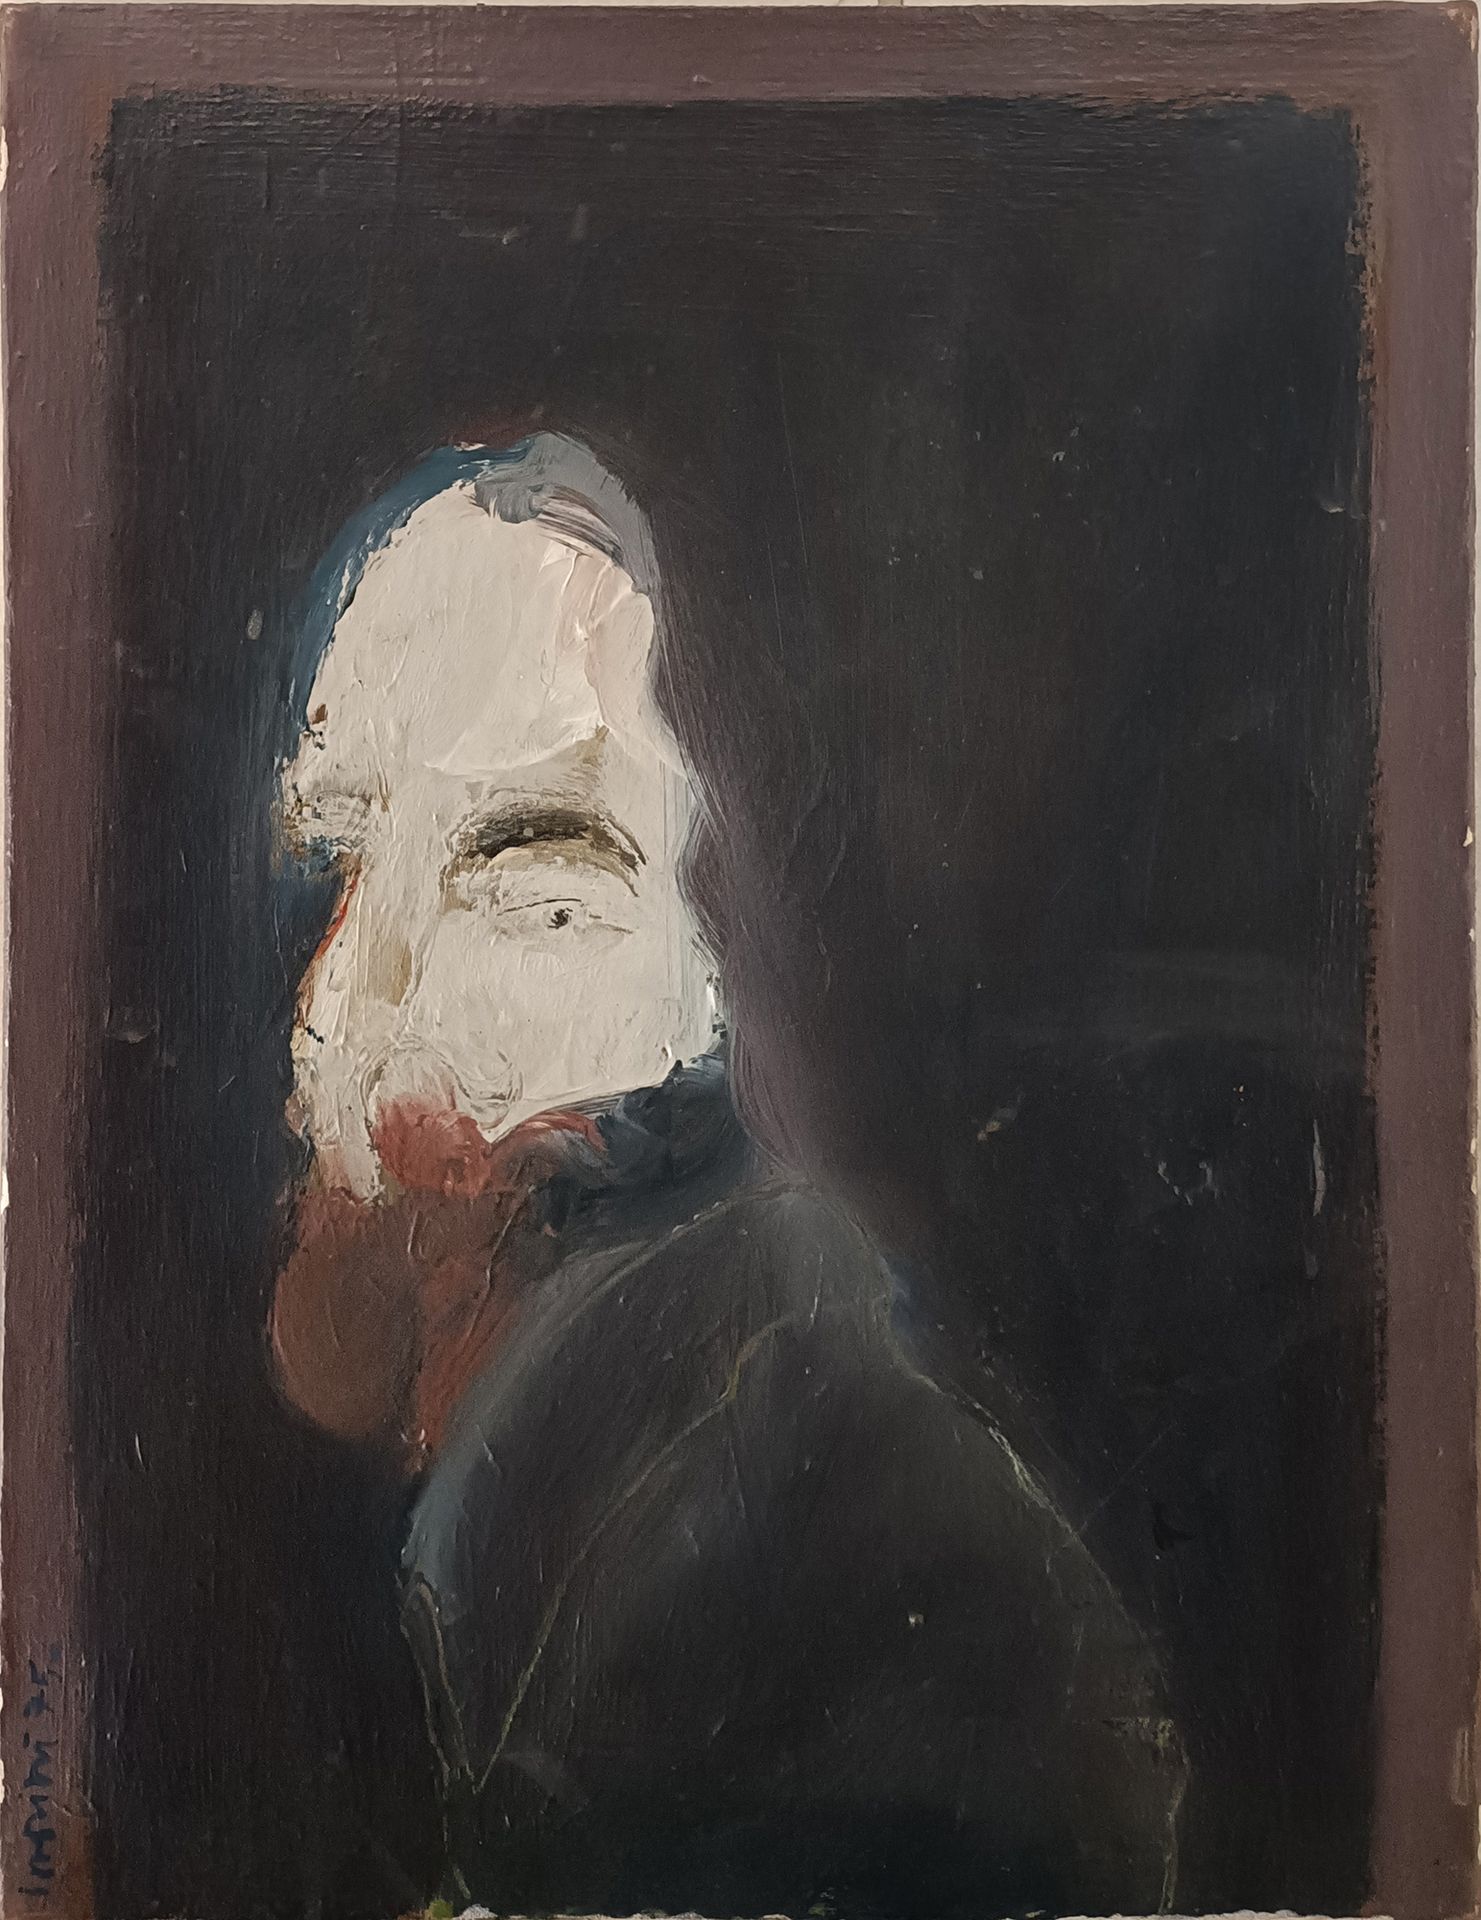 Claude MORINI (Limoges 1939 - Nice 1982) Self-portrait, 1975
Oil on canvas
Signe&hellip;